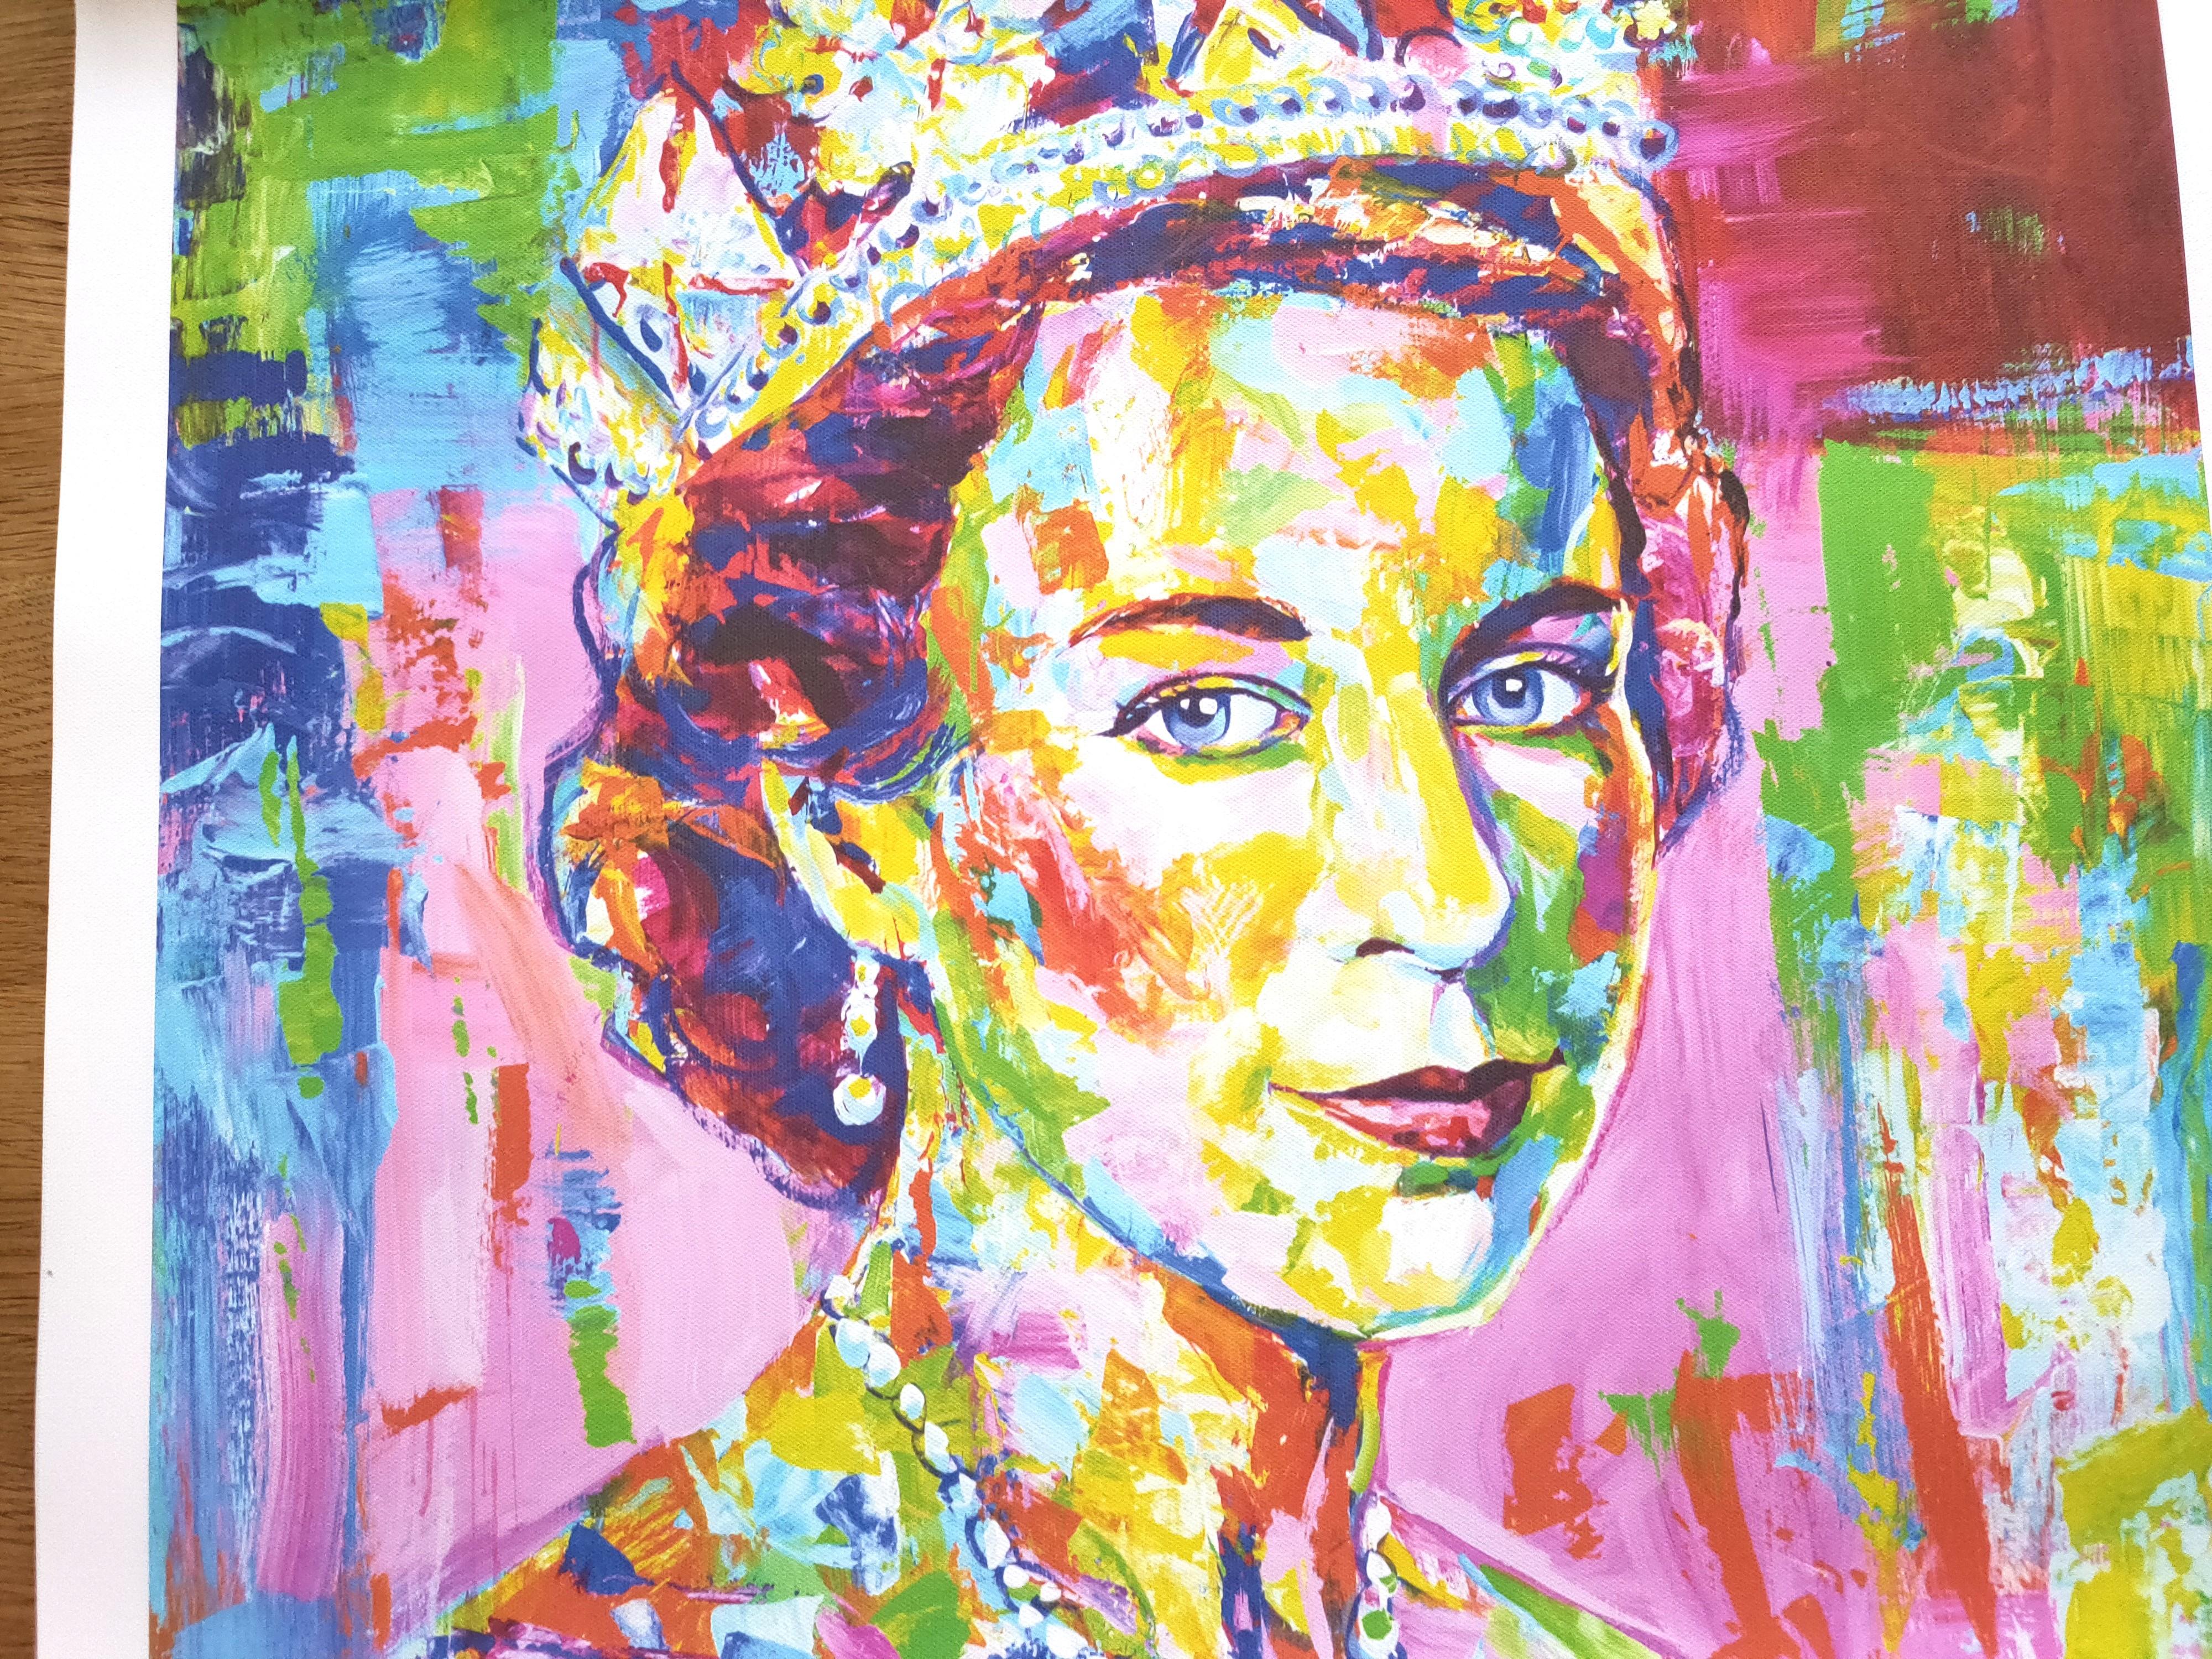 Queen Elizabeth II Pop Art Portrait Print on Canvas 50x50cm by Iryna Kastsova 2